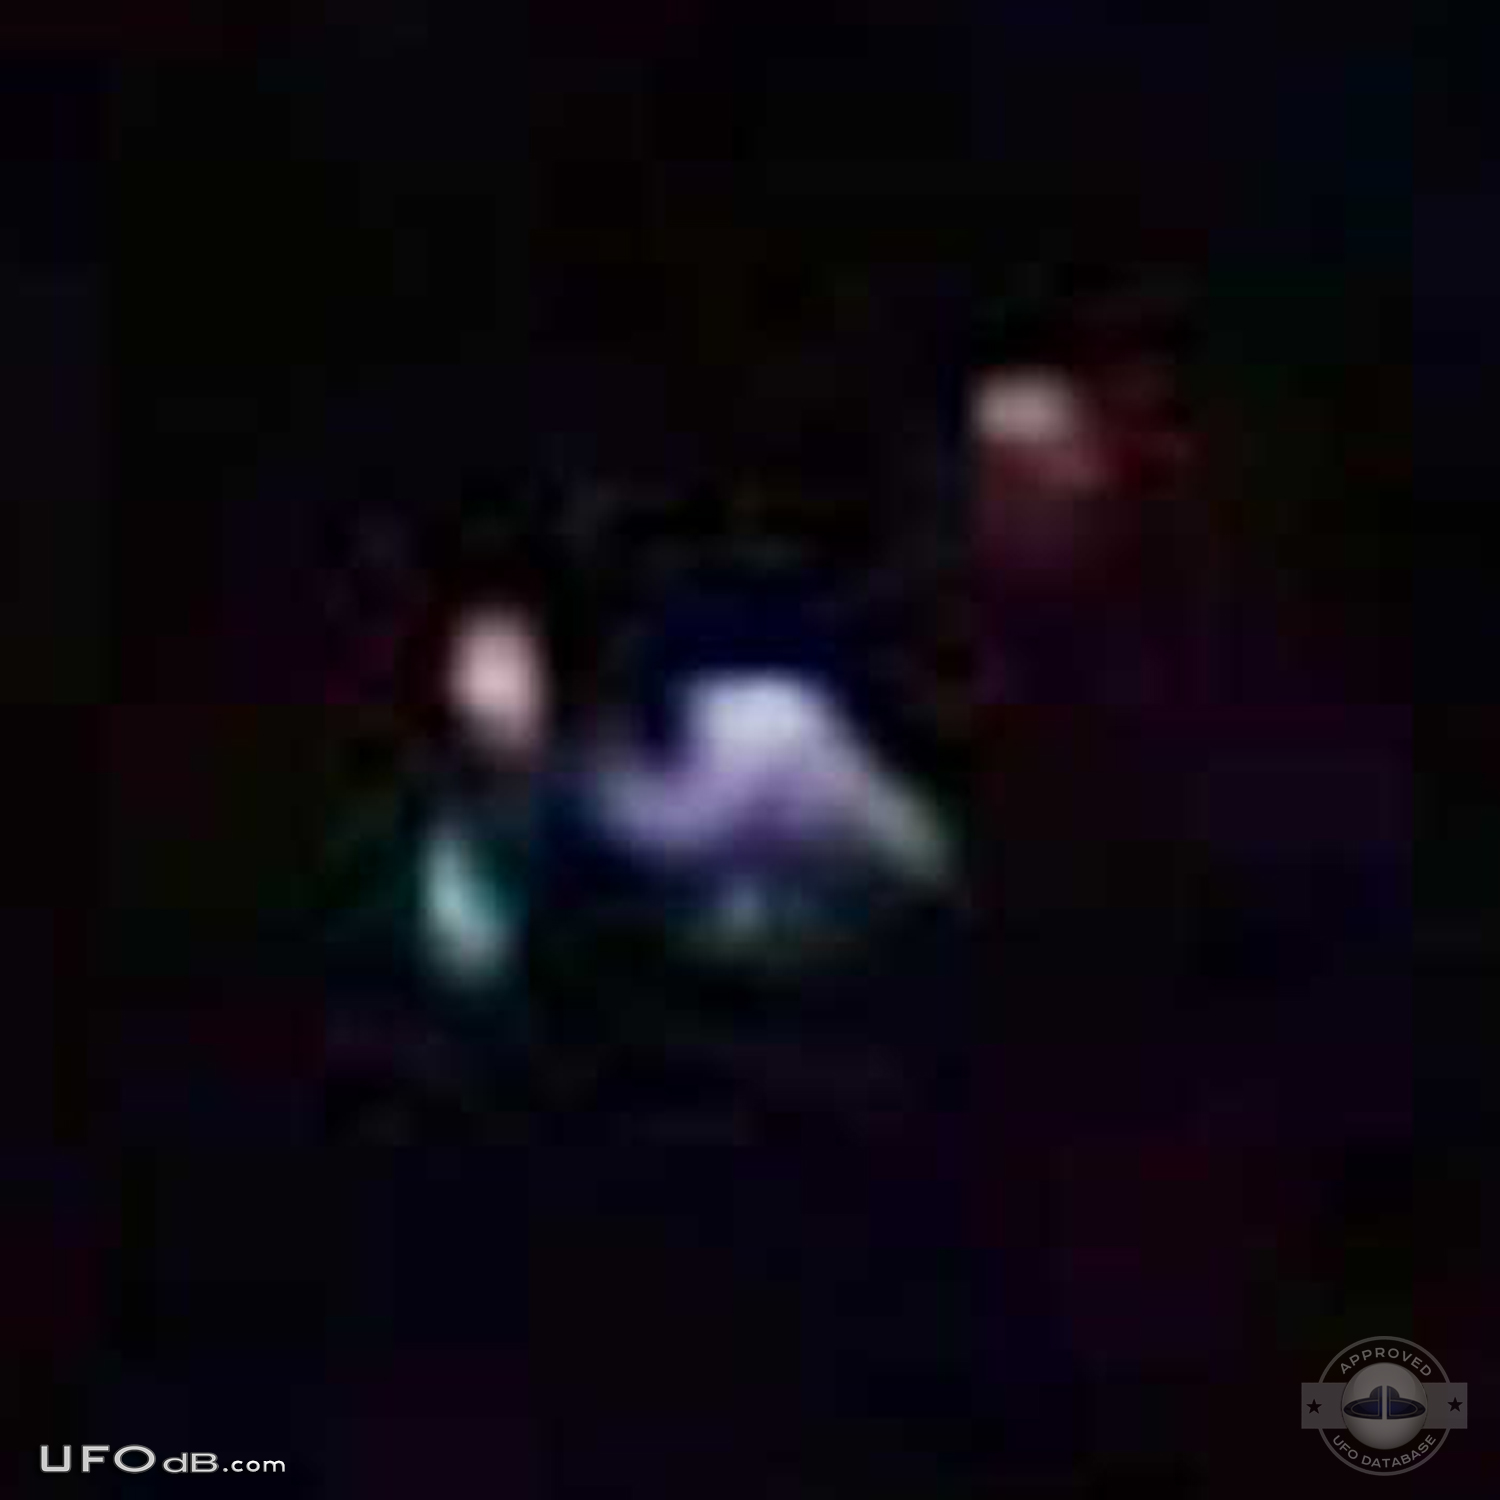 UFO with strange shape caught on picture over Santa Tecla, El Salvador UFO Picture #387-3